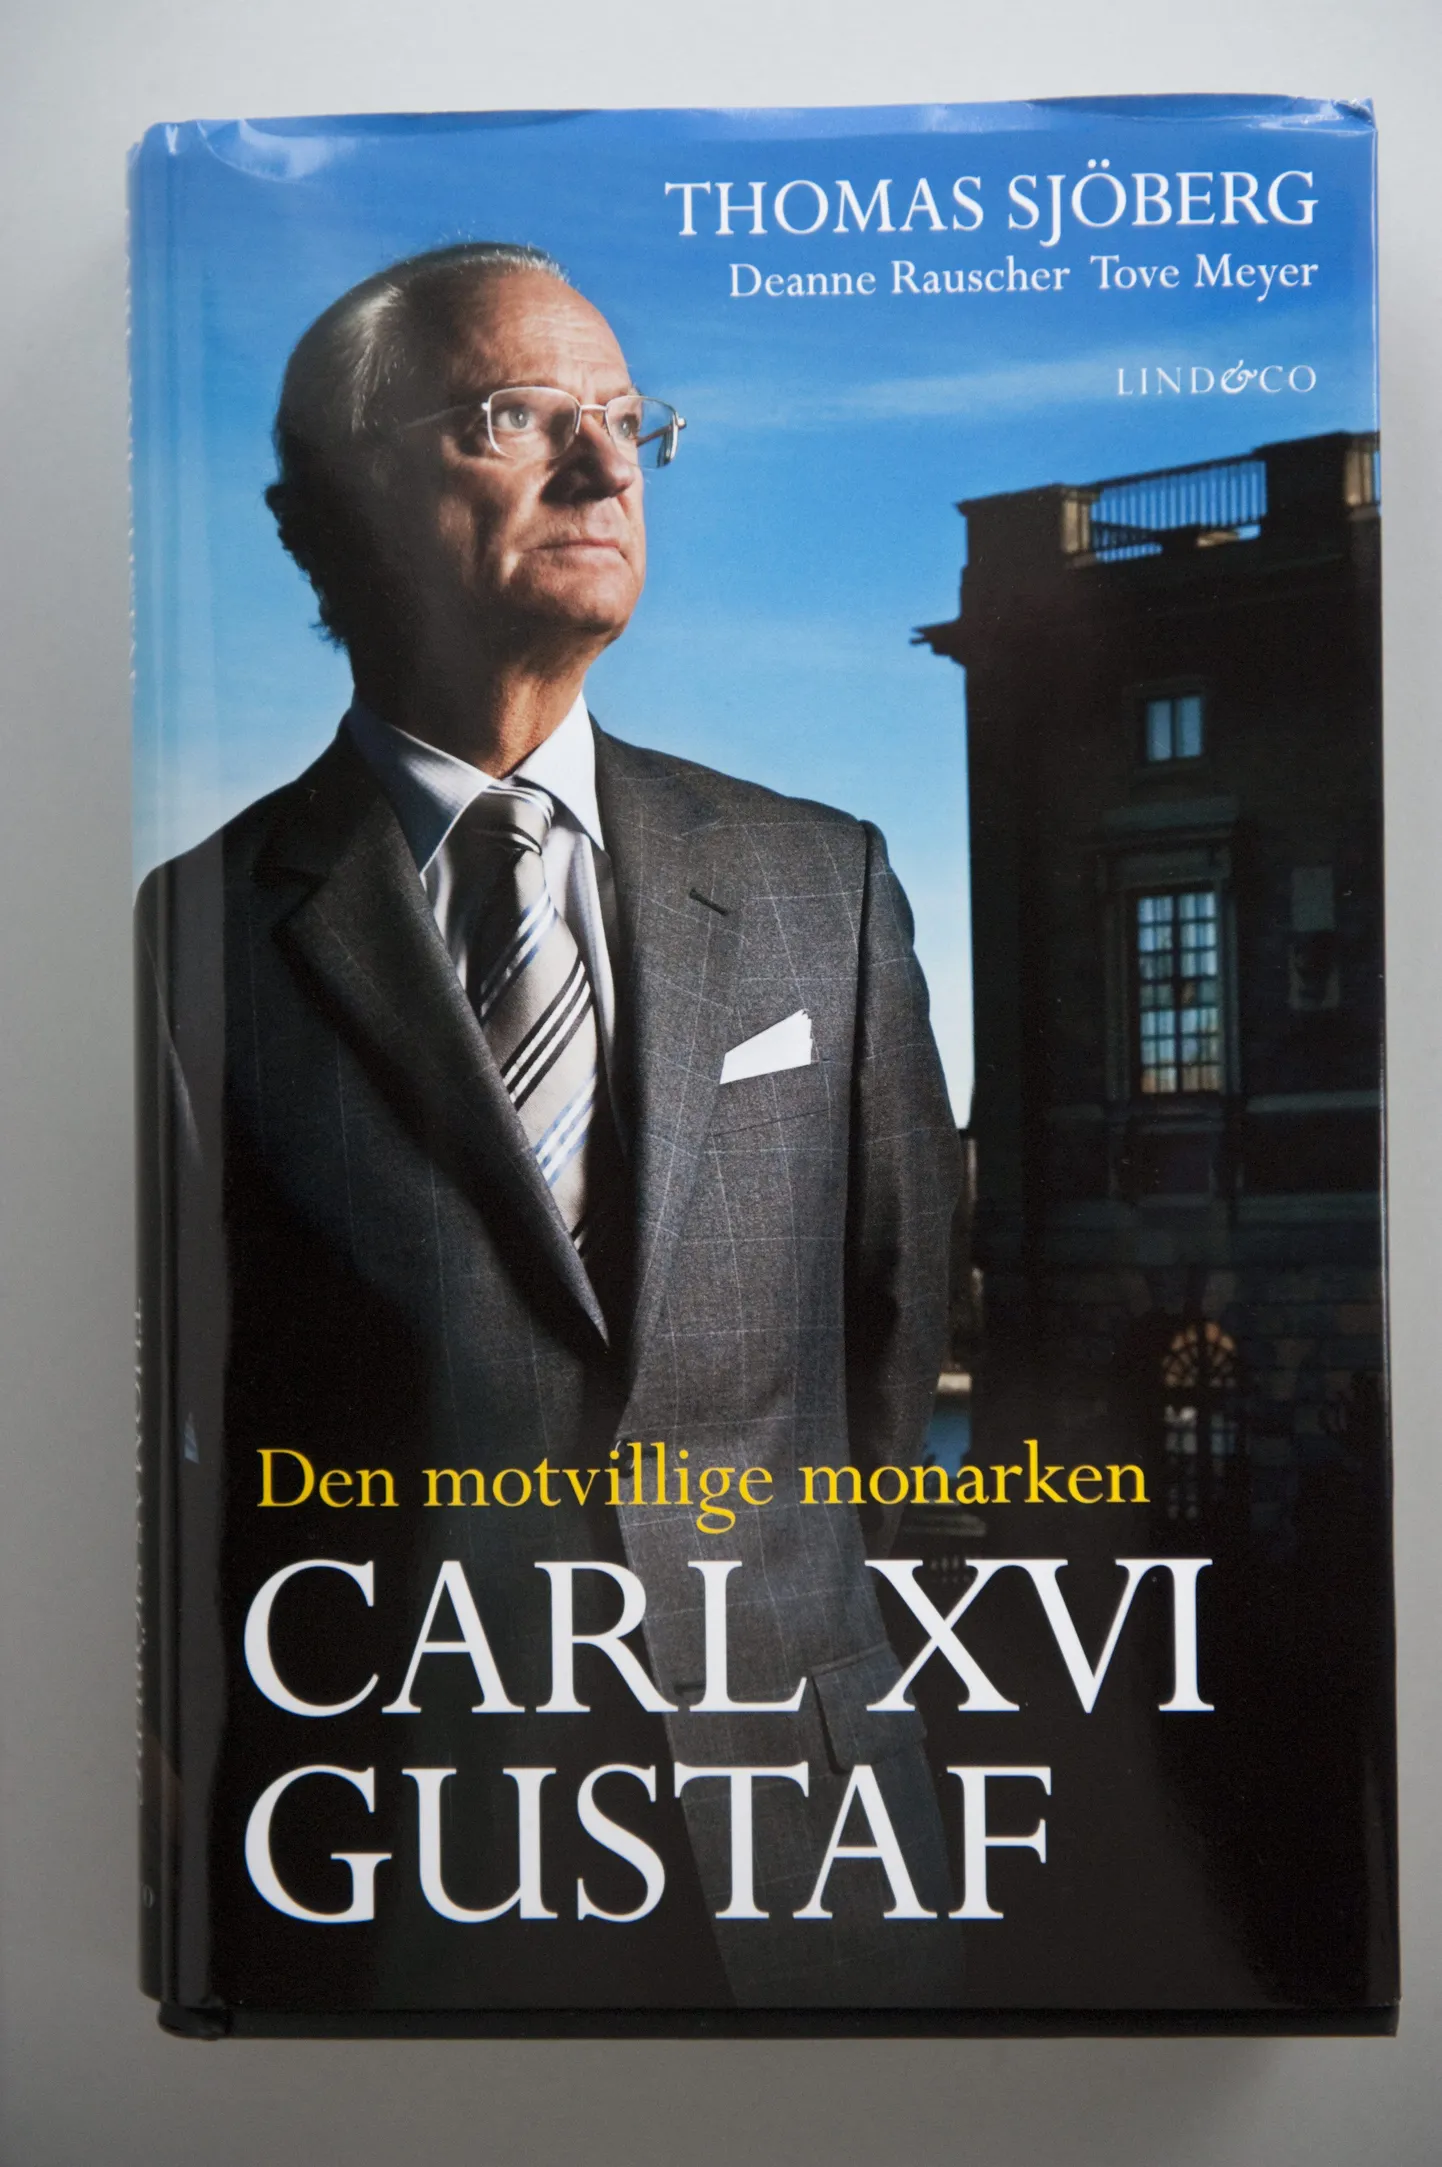 Rootsi kuinga elust rääkiv raamat «Carl XVI Gustaf - Den motvillige monarken»